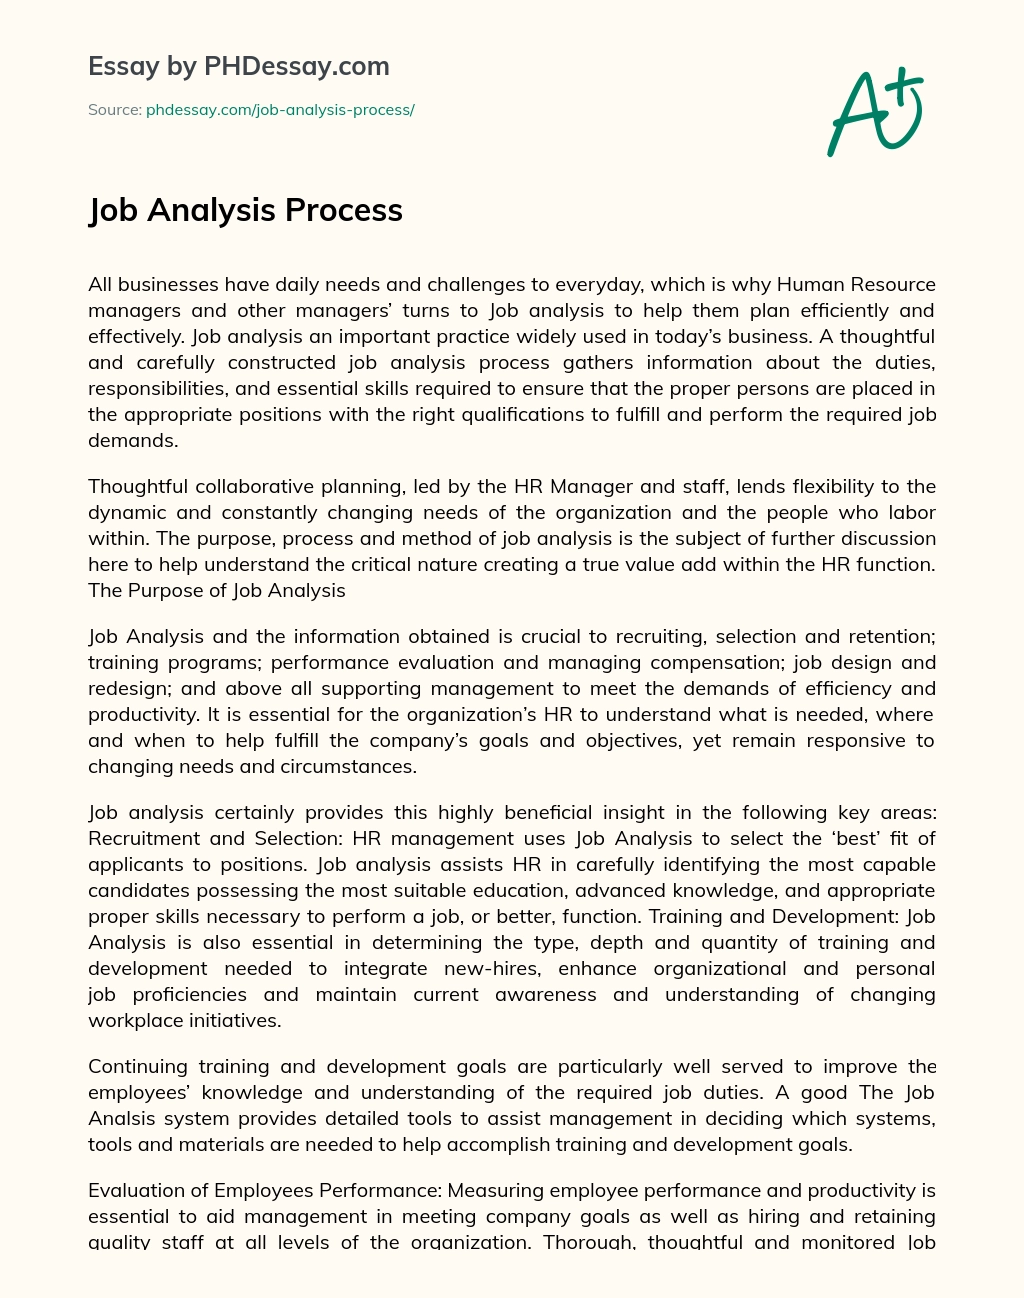 Job Analysis Process essay